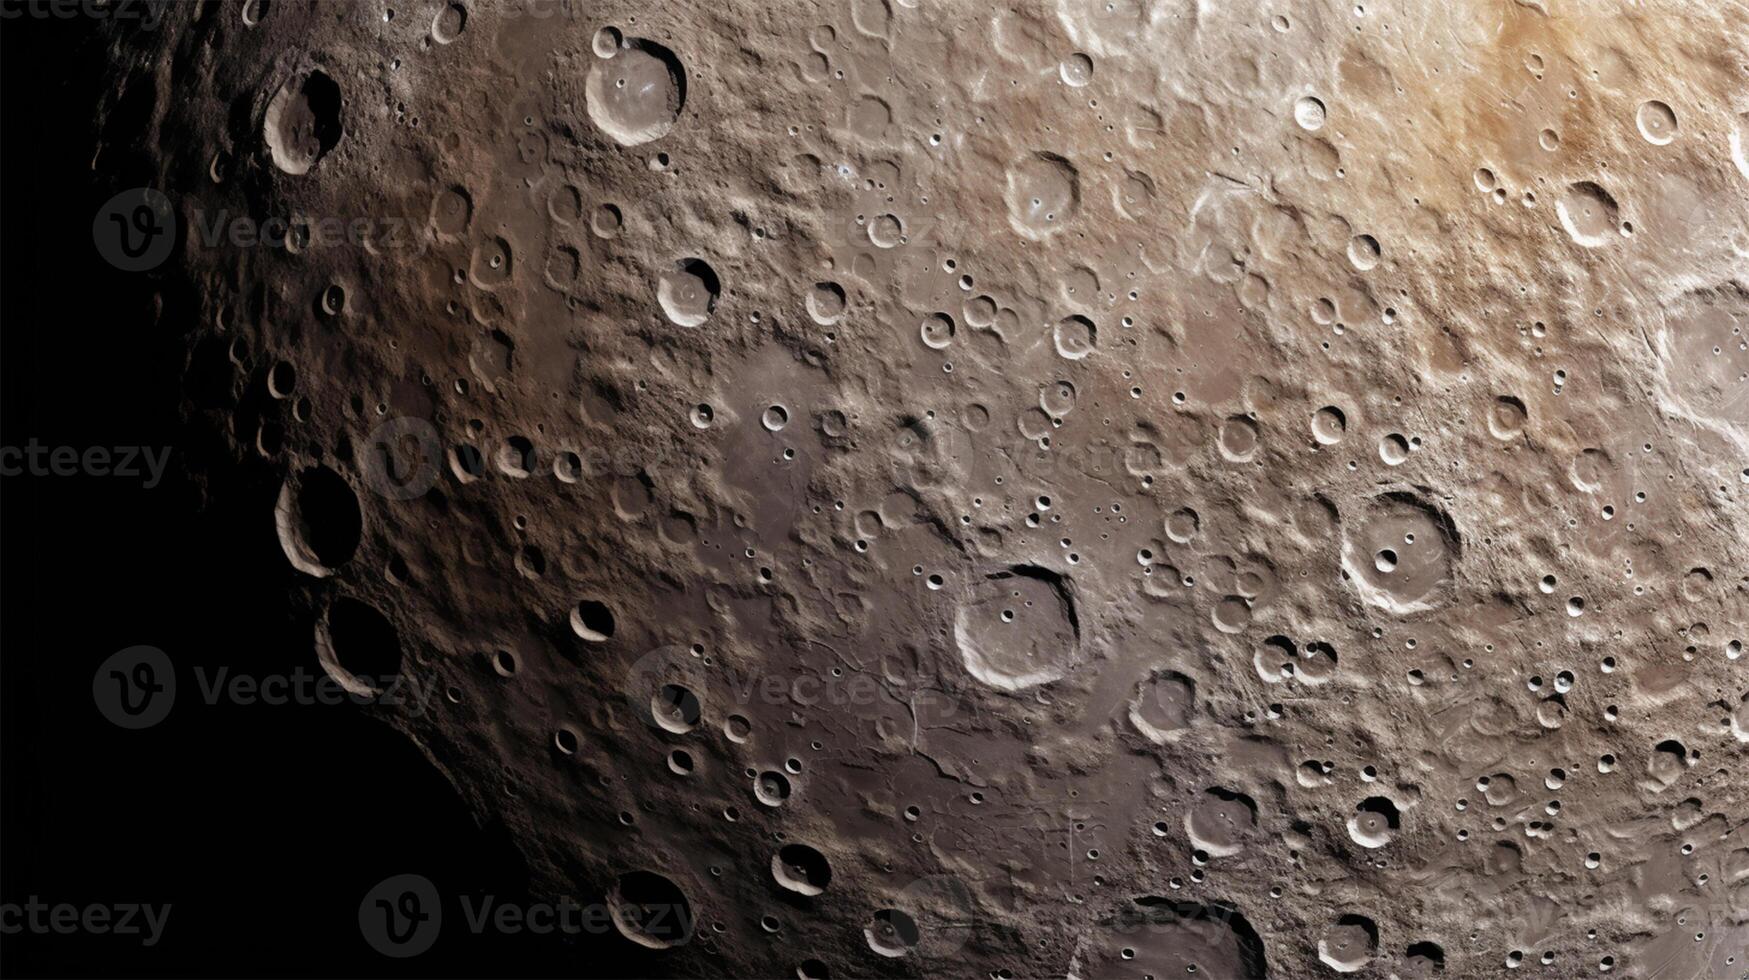 ai gegenereerd luna maan oppervlakte structuur achtergrond foto